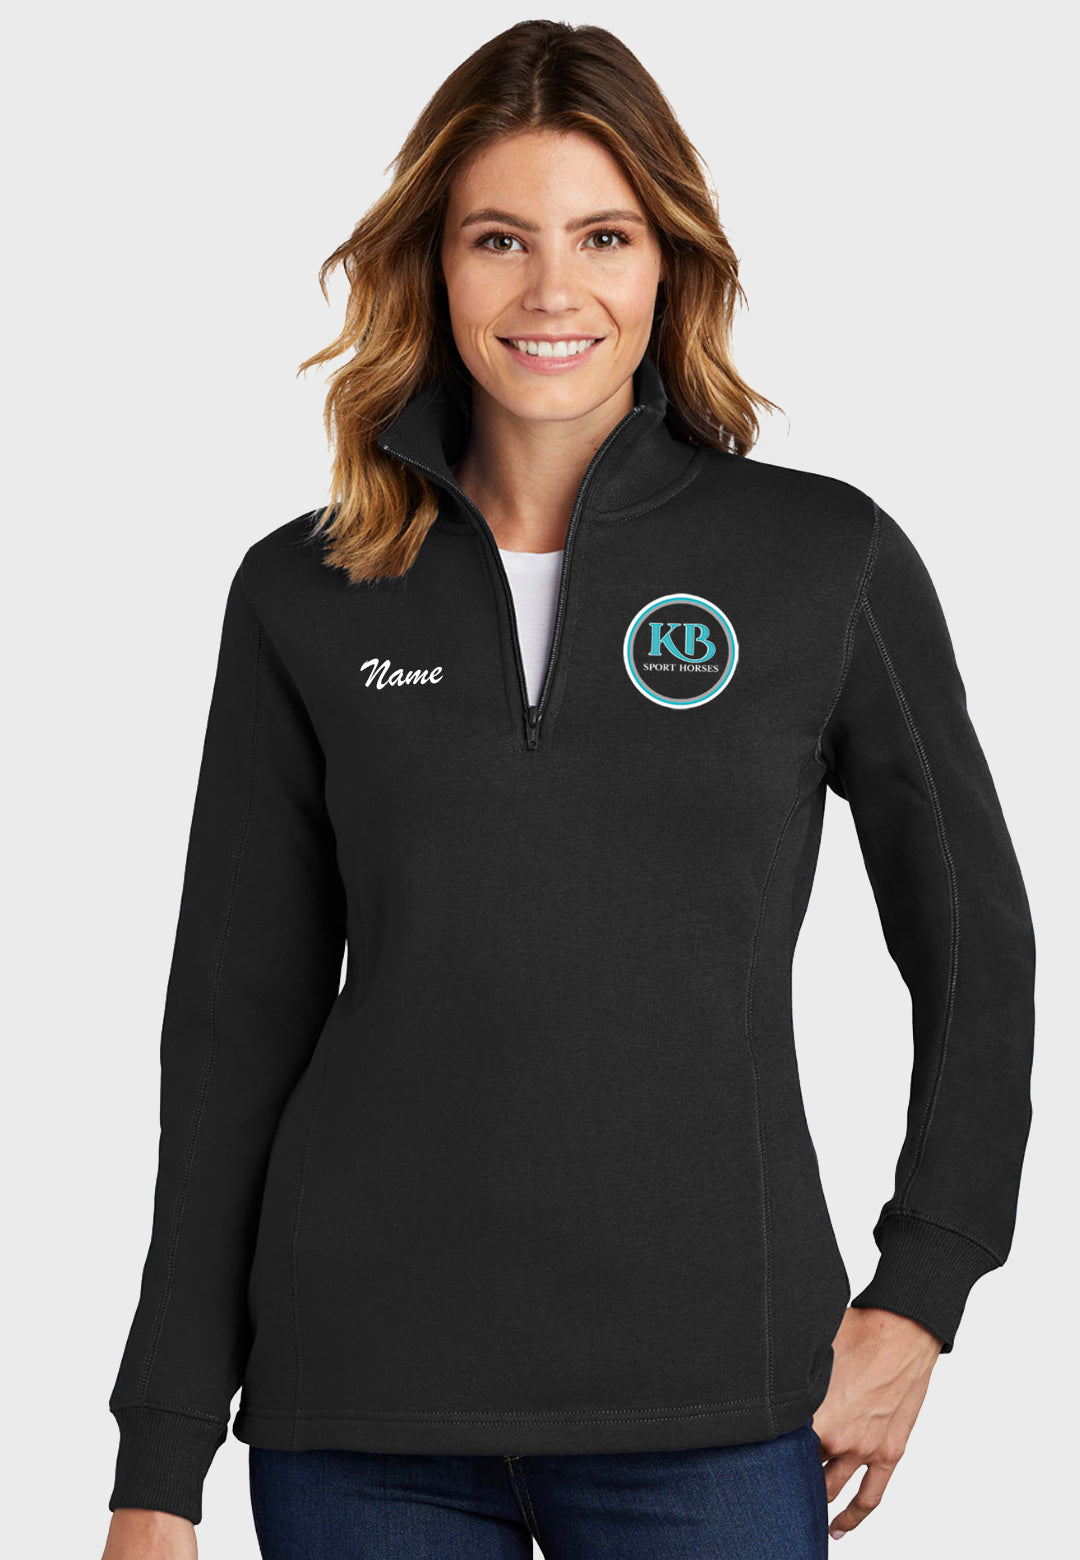 KB Sport Horses Sport-Tek® Ladies 1/4-Zip Sweatshirt - 2 Color Options